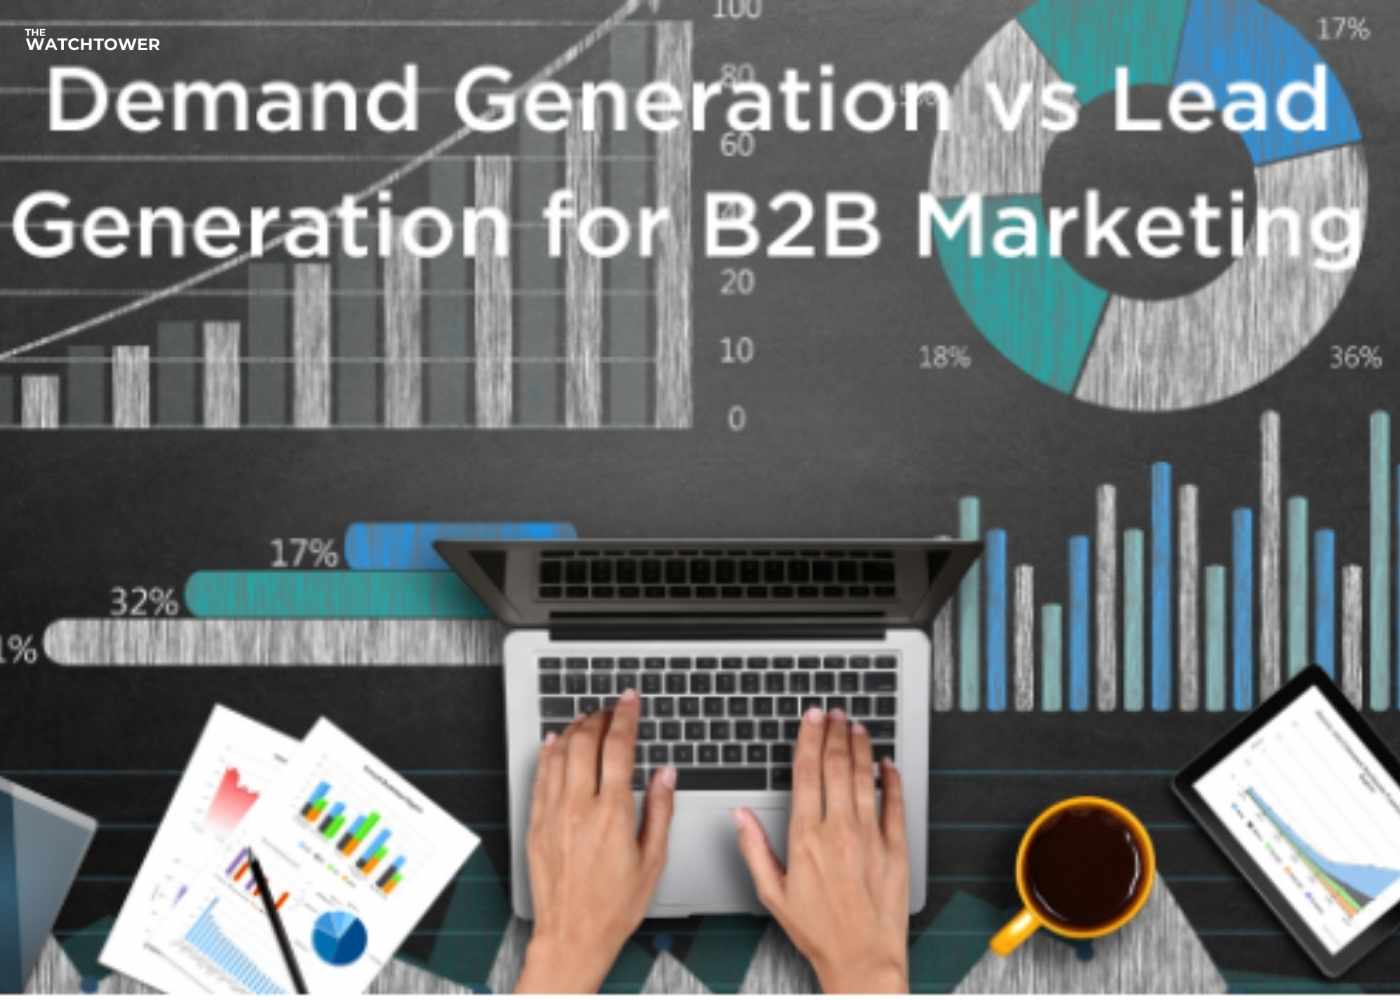 Demand Generation vs Lead Generation for B2B Marketing